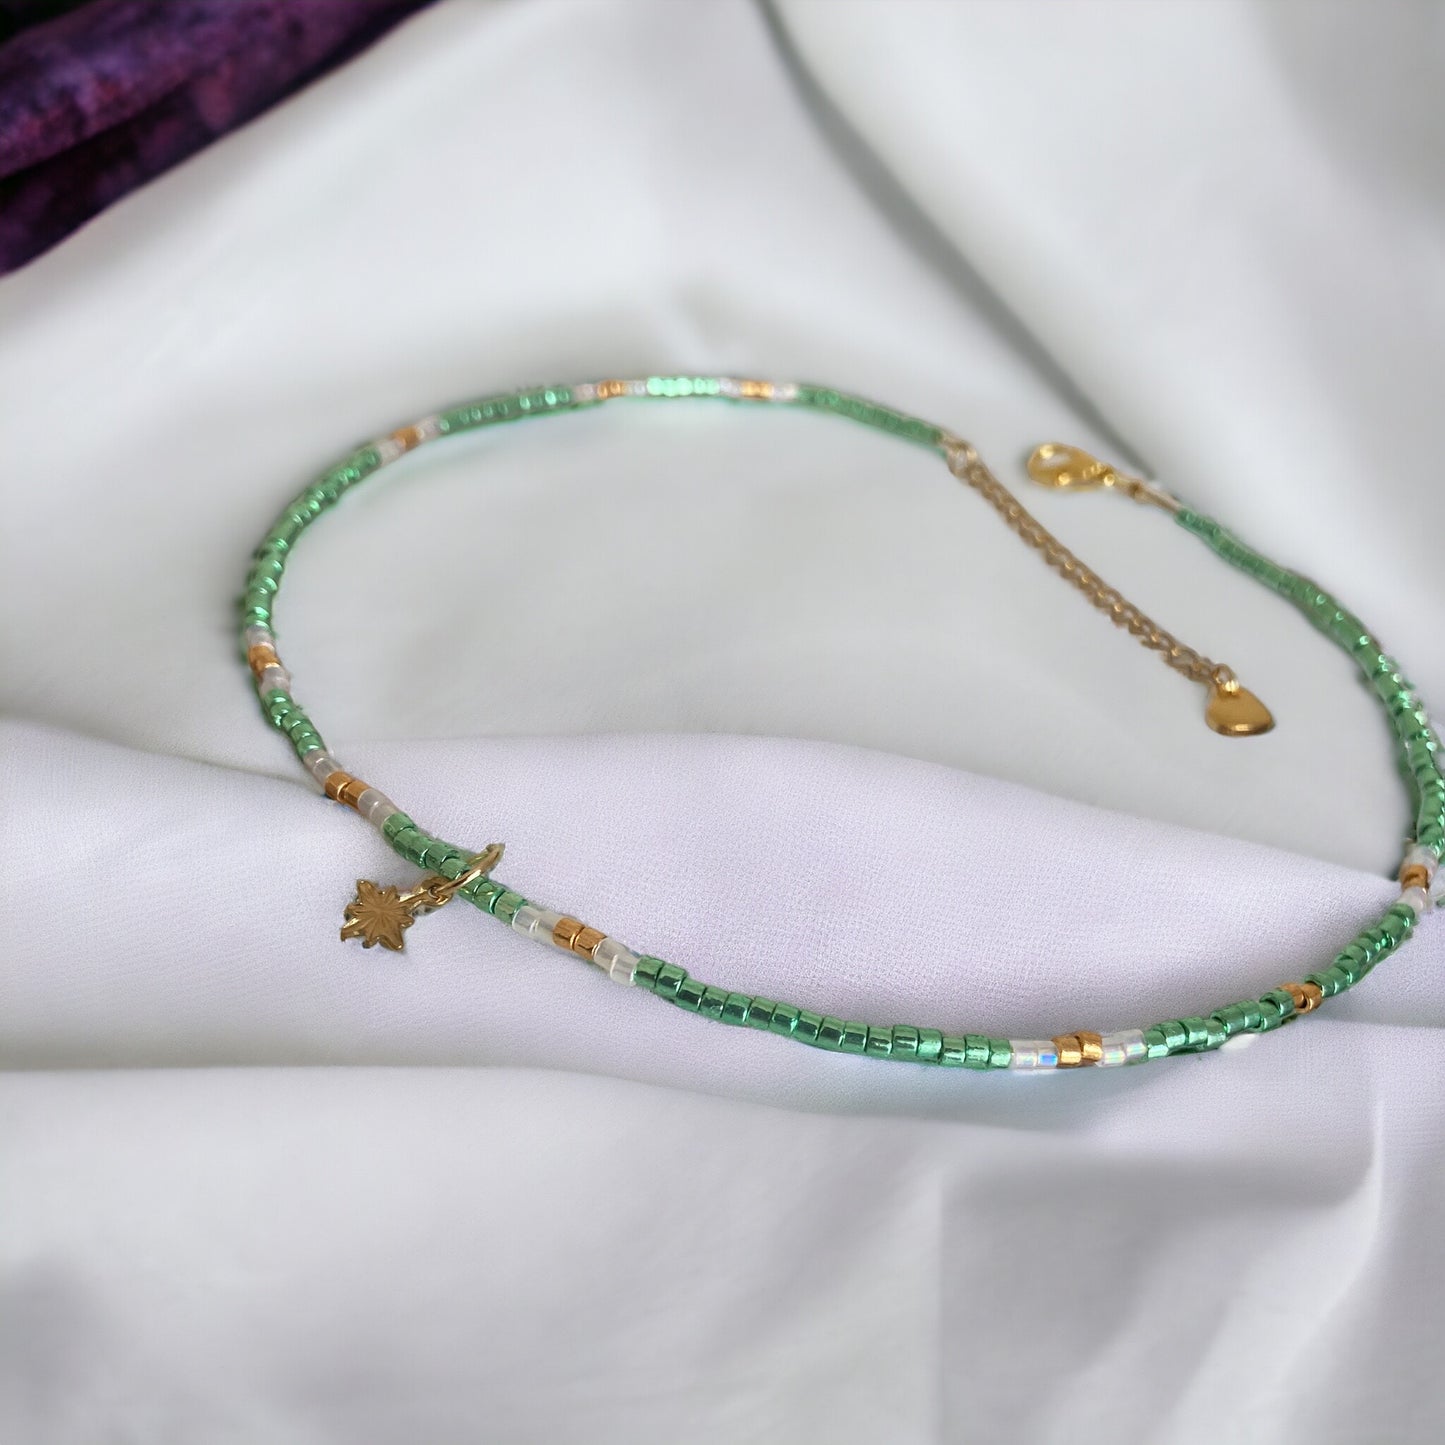 Collier Miyuki : Minty collier en perles minuscule Miyuki